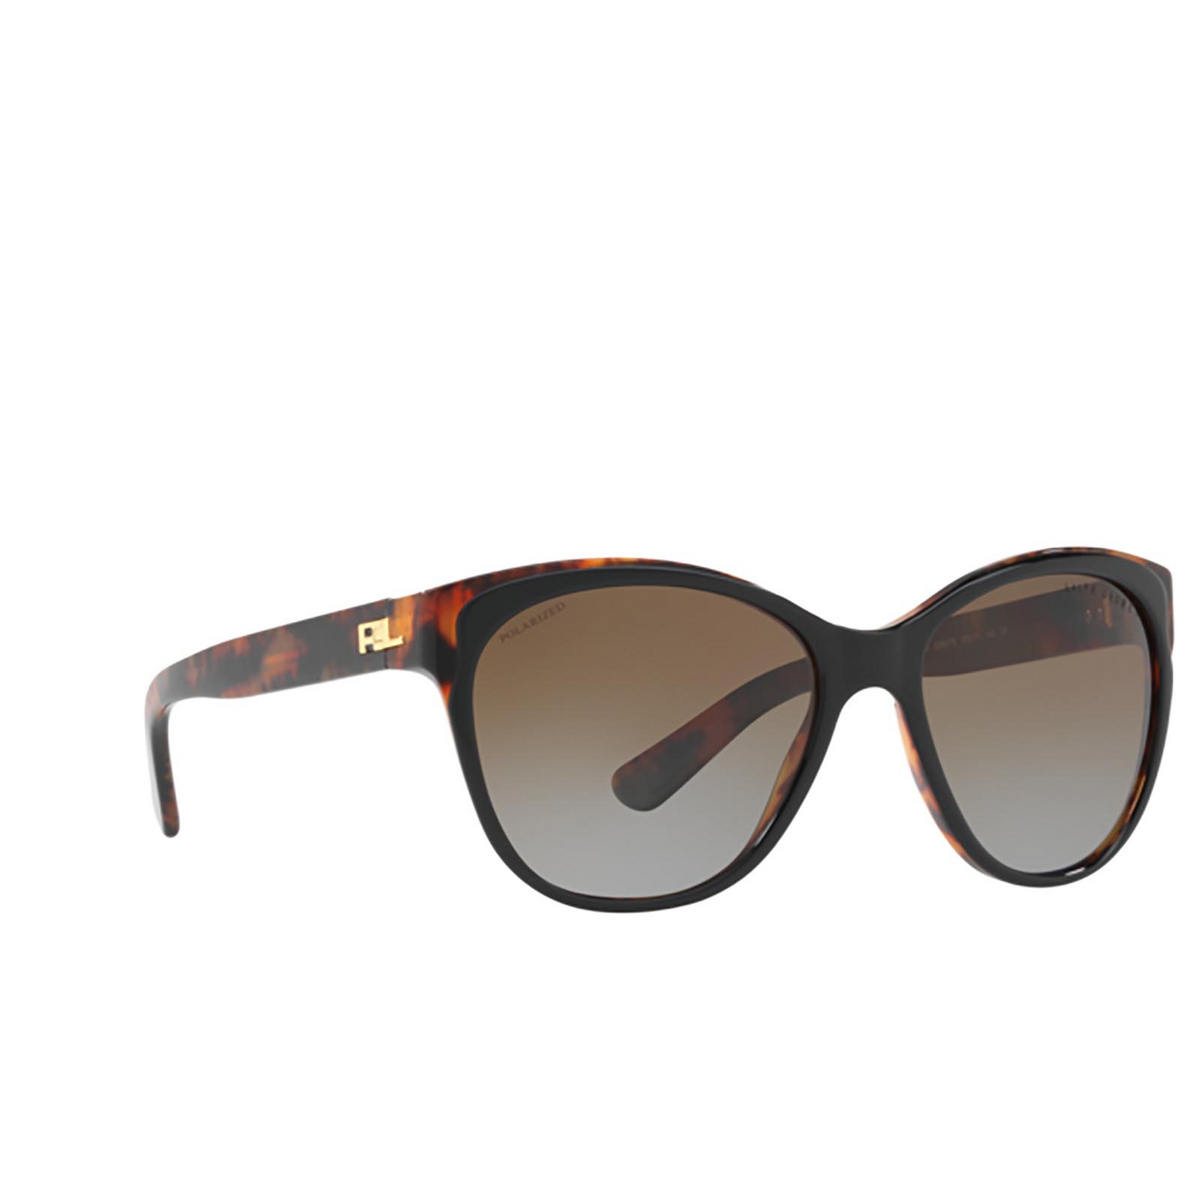 Ralph Lauren® Cat-eye Sunglasses: RL8156 color Shiny Black On Jerry Havana 5260T5 - three-quarters view.